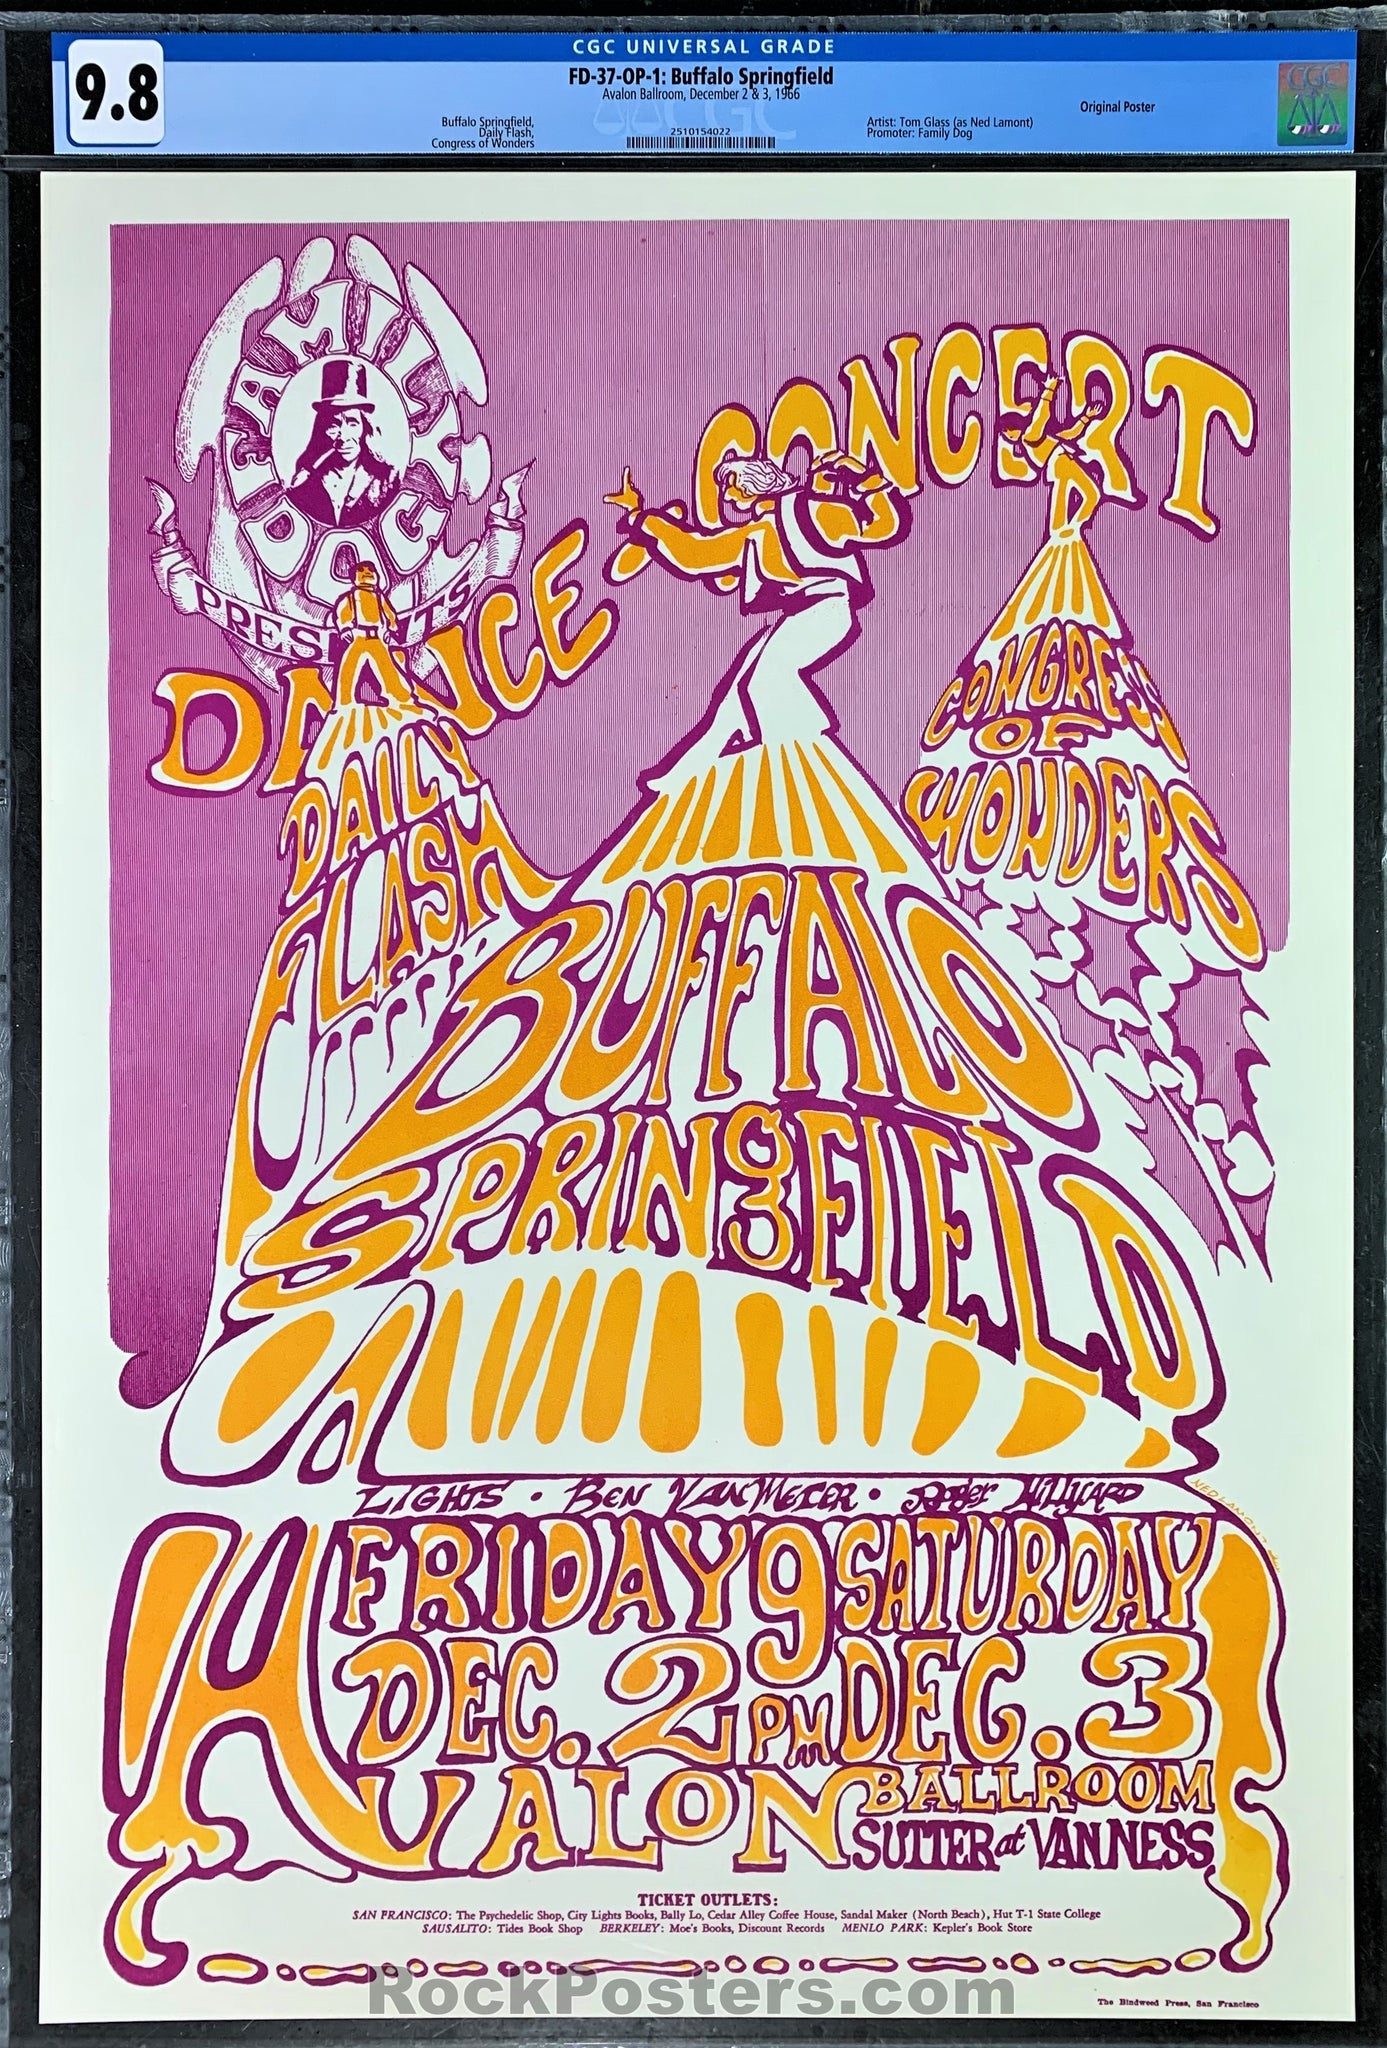 AUCTION -  FD-37 - Buffalo Springfield - 1967 Poster - Avalon Ballroom - CGC Graded 9.8